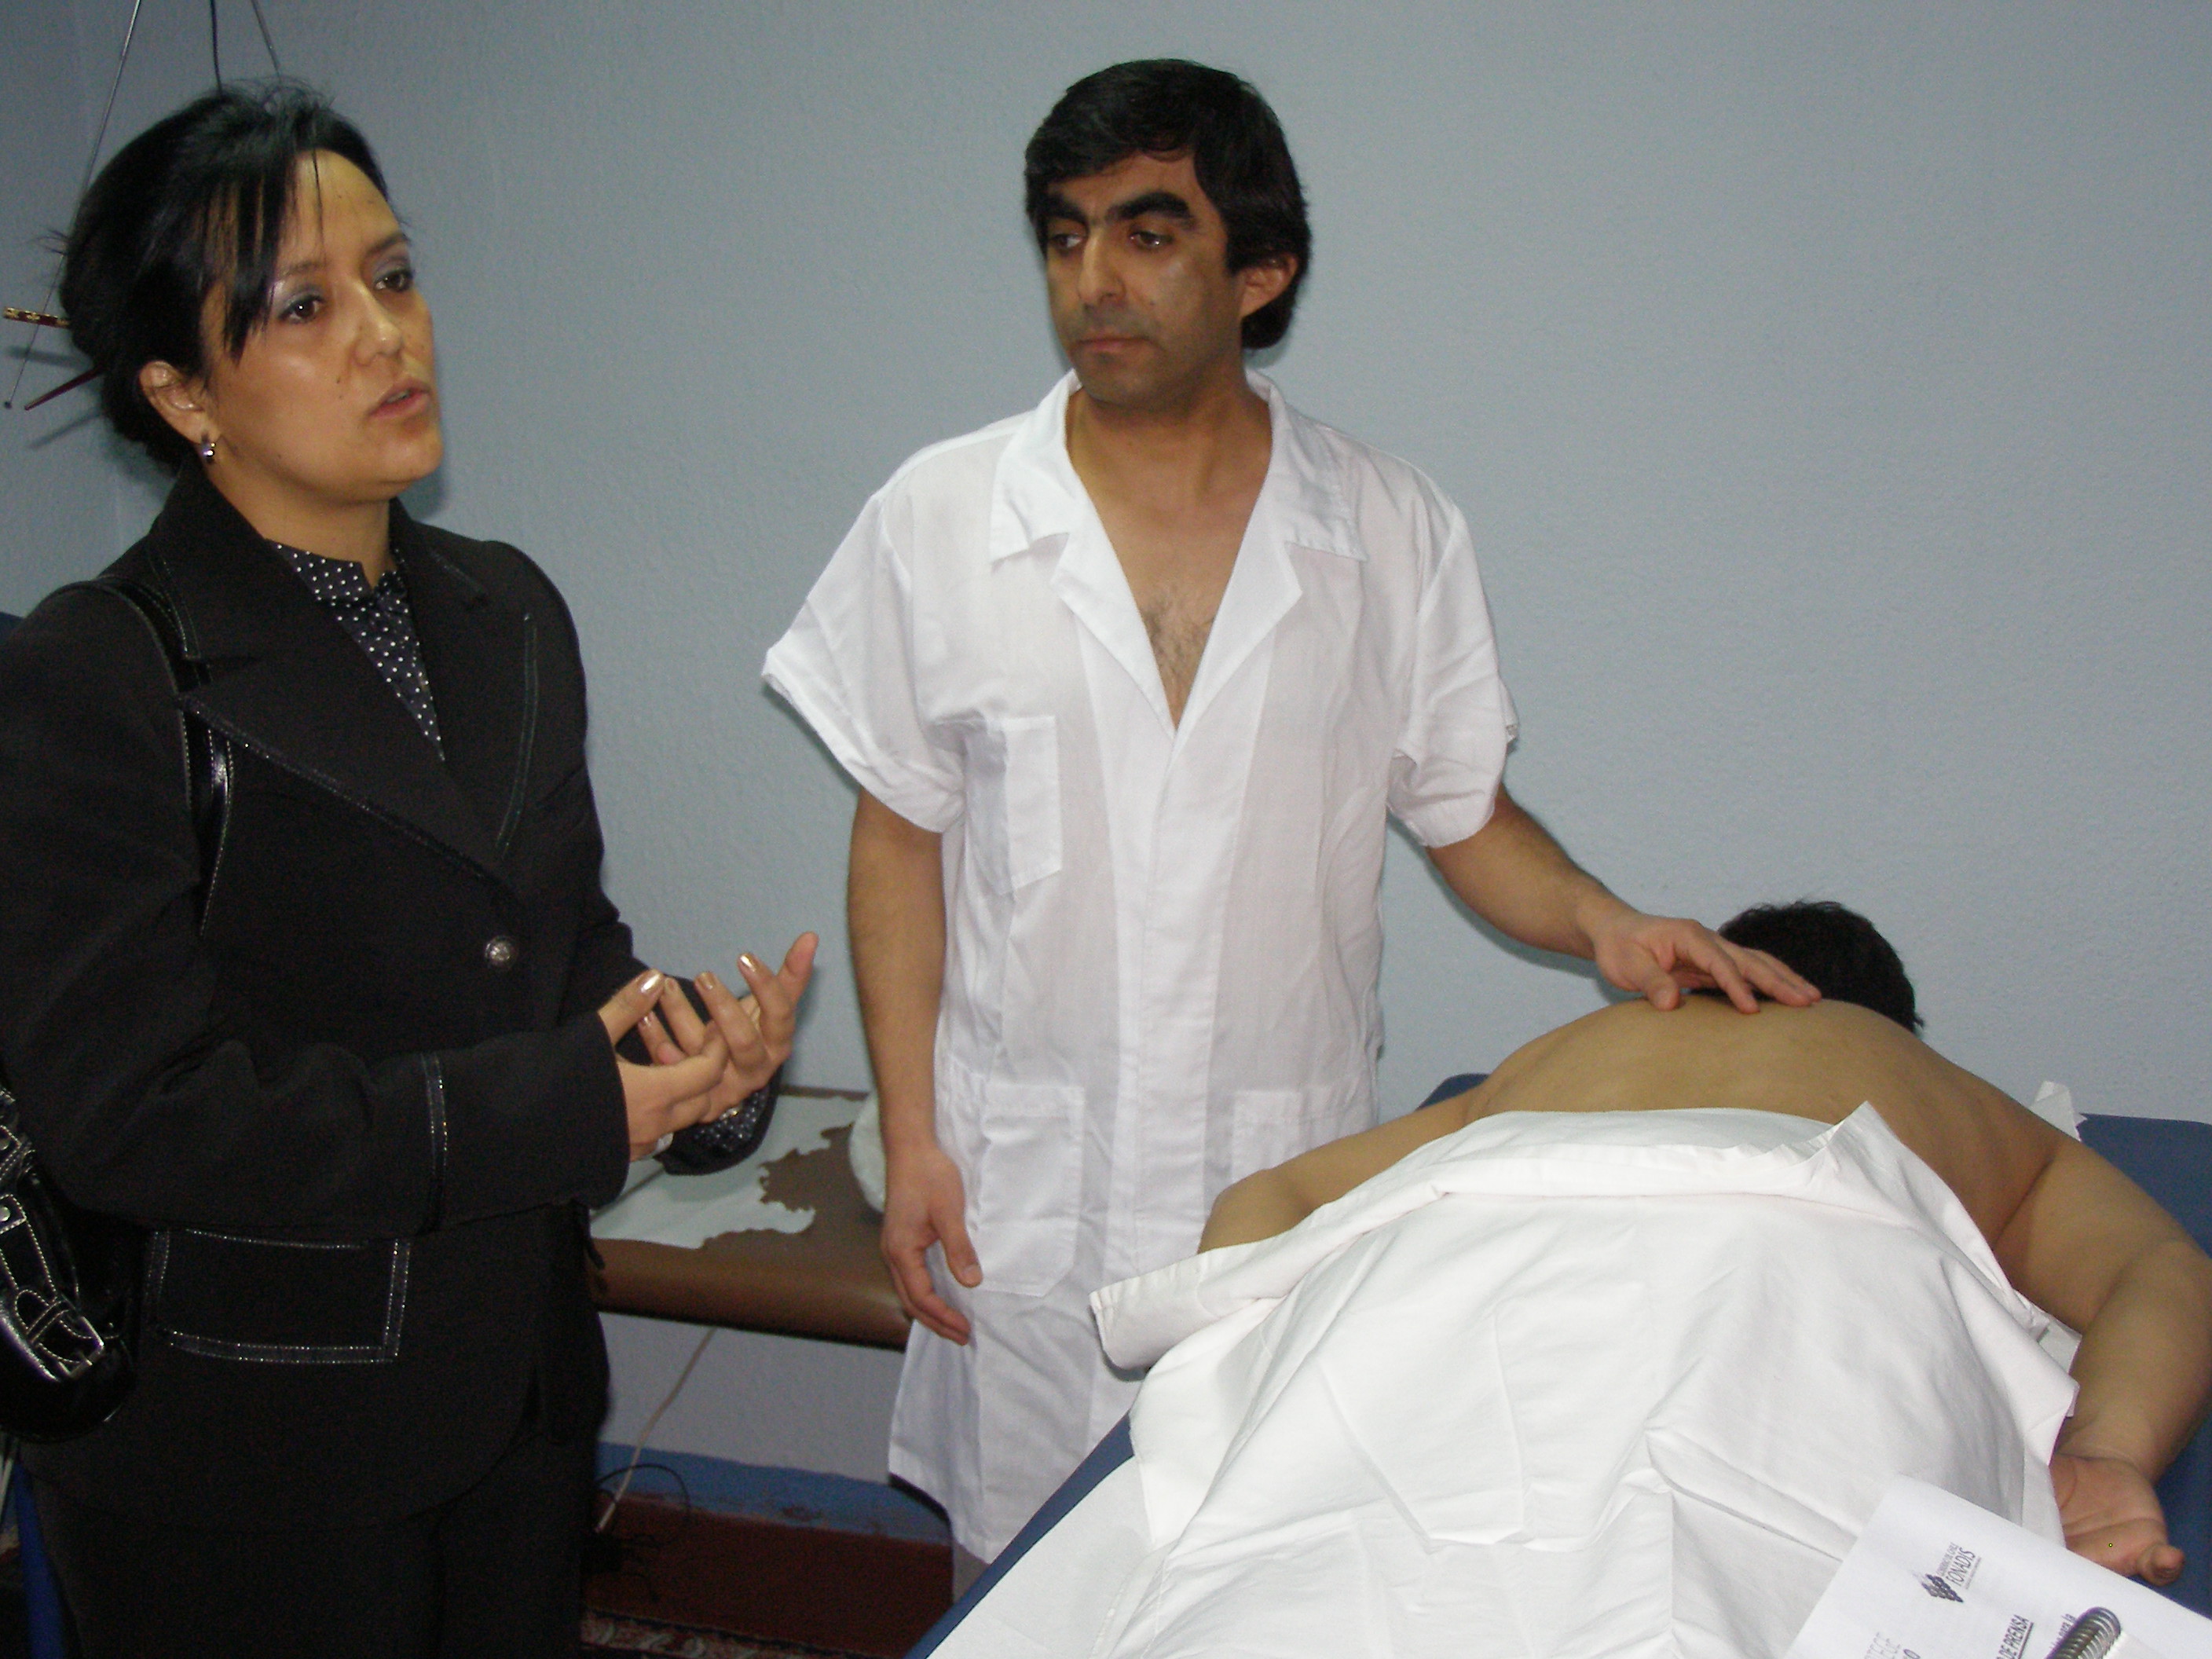 En la fotografía aparece la Coordinadora  de Fonadis, Paula Aravena, Junto a un masoterapeuta